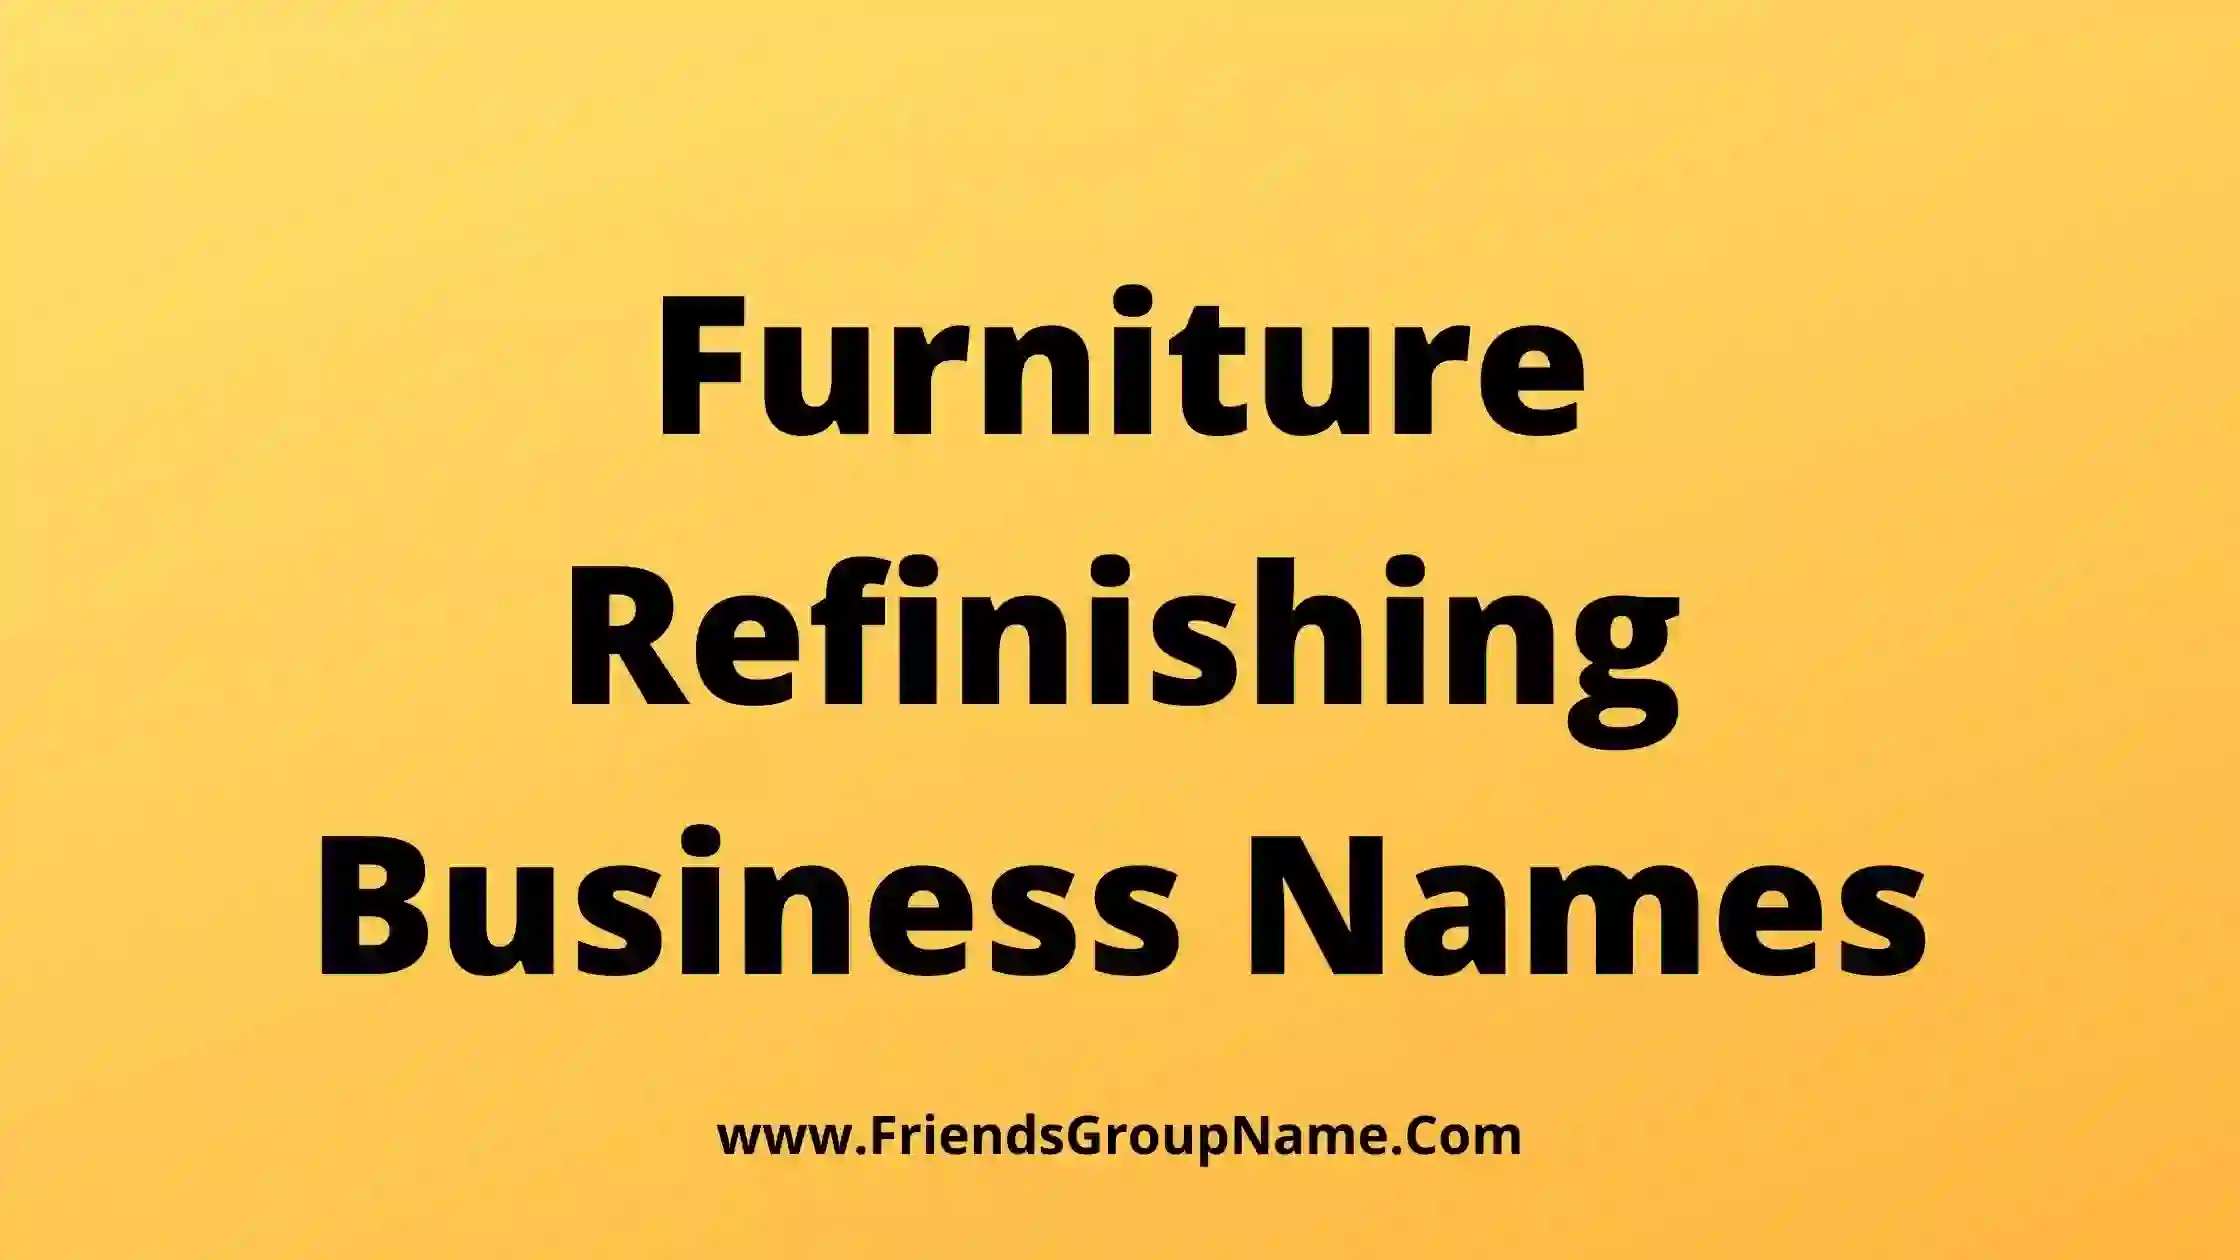 Furniture Refinishing Business Names